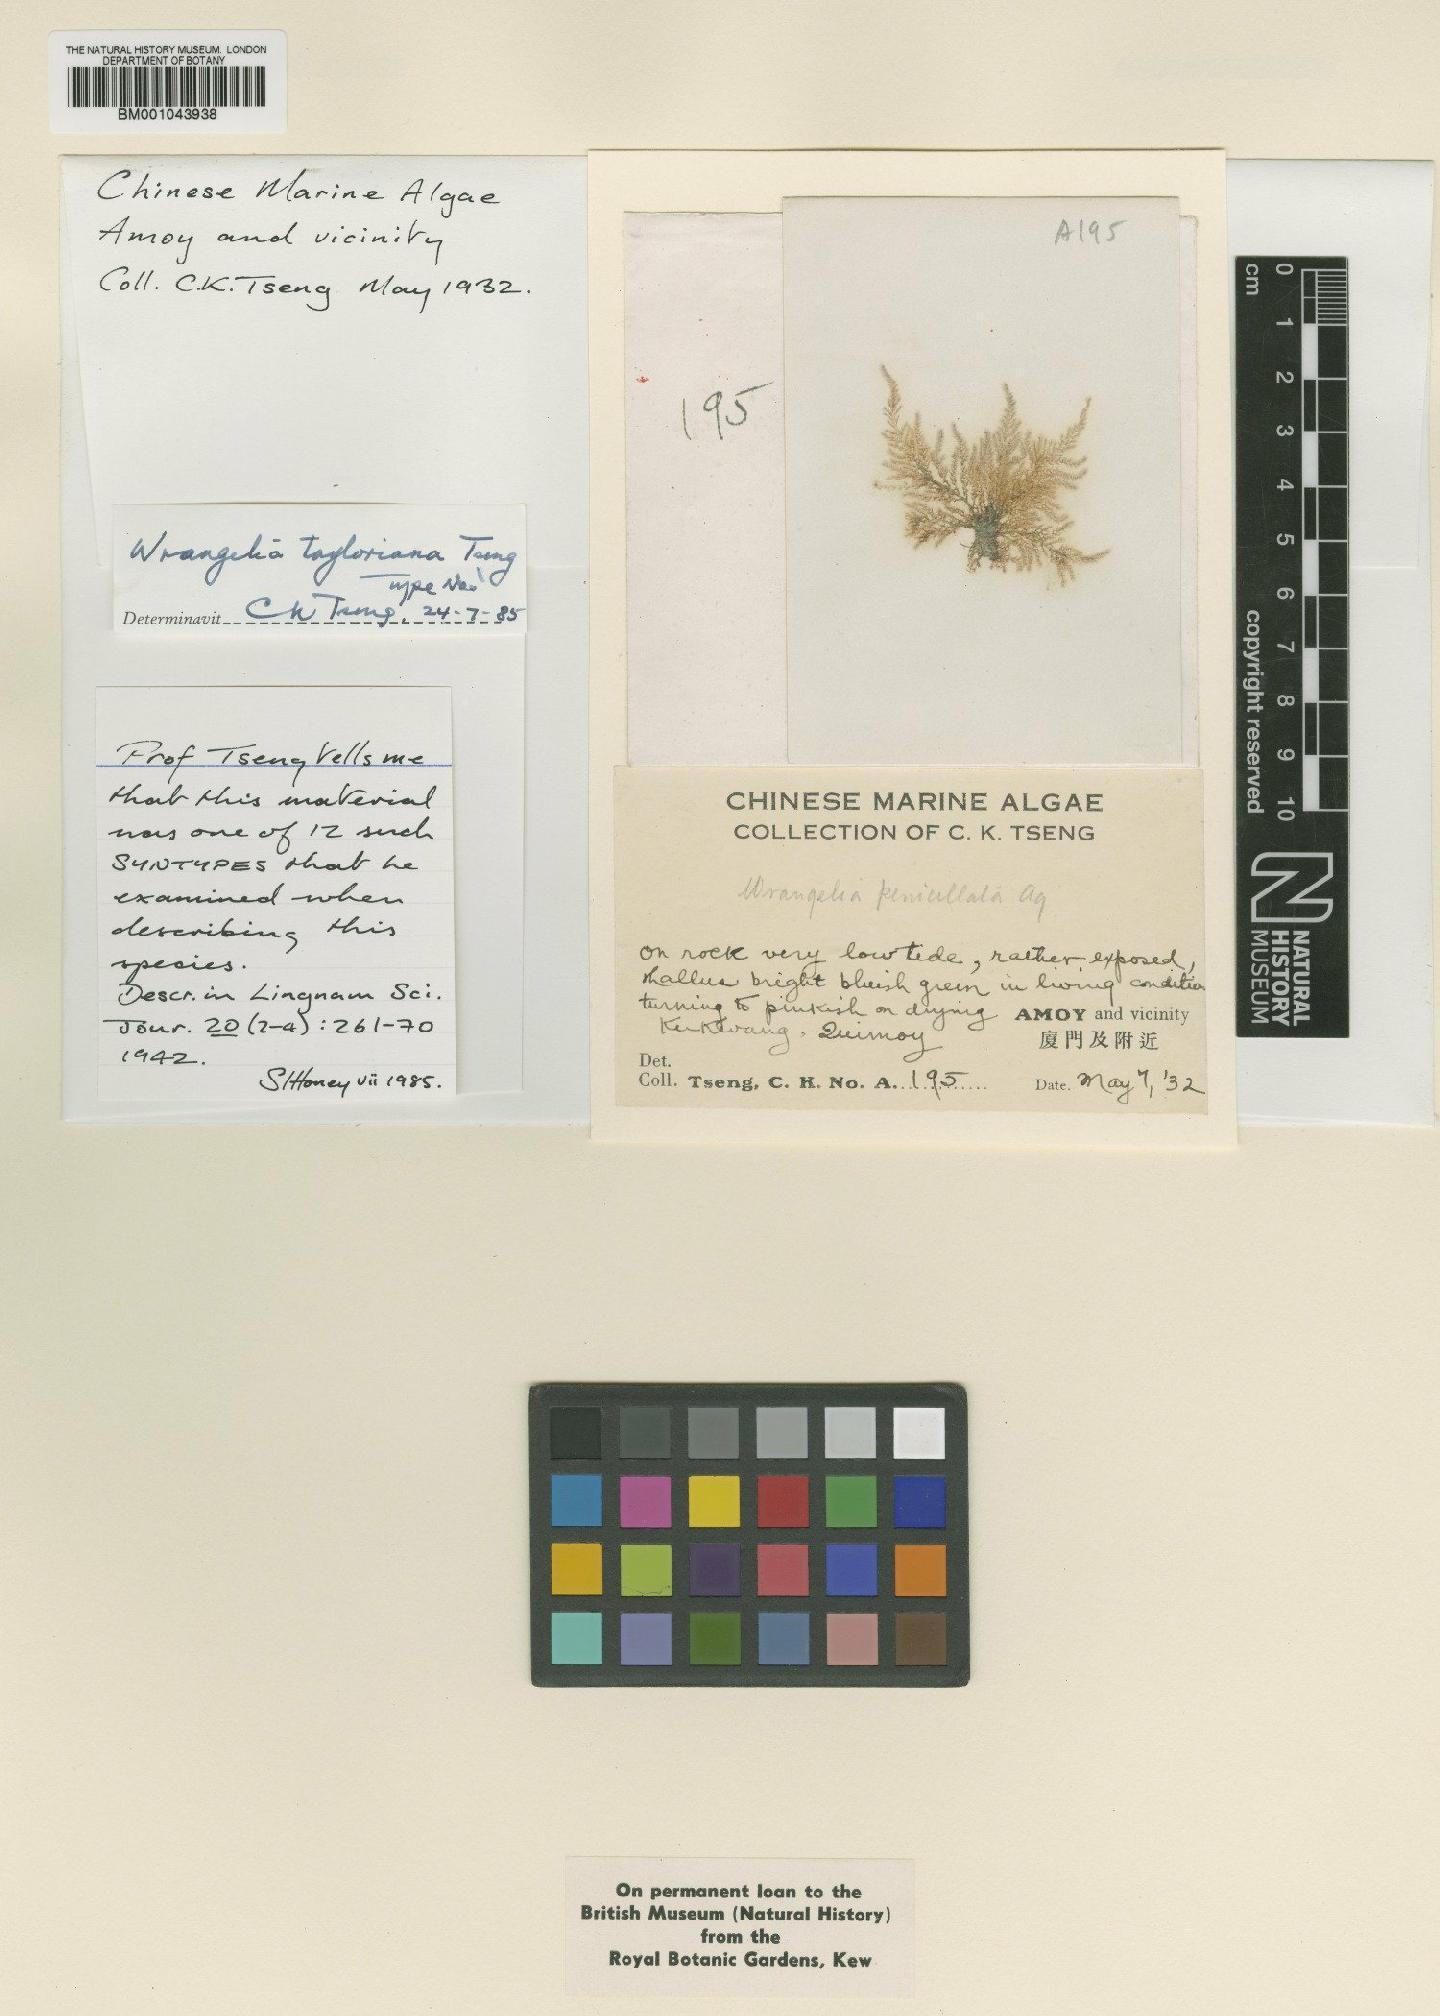 To NHMUK collection (Wrangelia tayloriana C.K.Tseng; Isotype; NHMUK:ecatalogue:2394260)